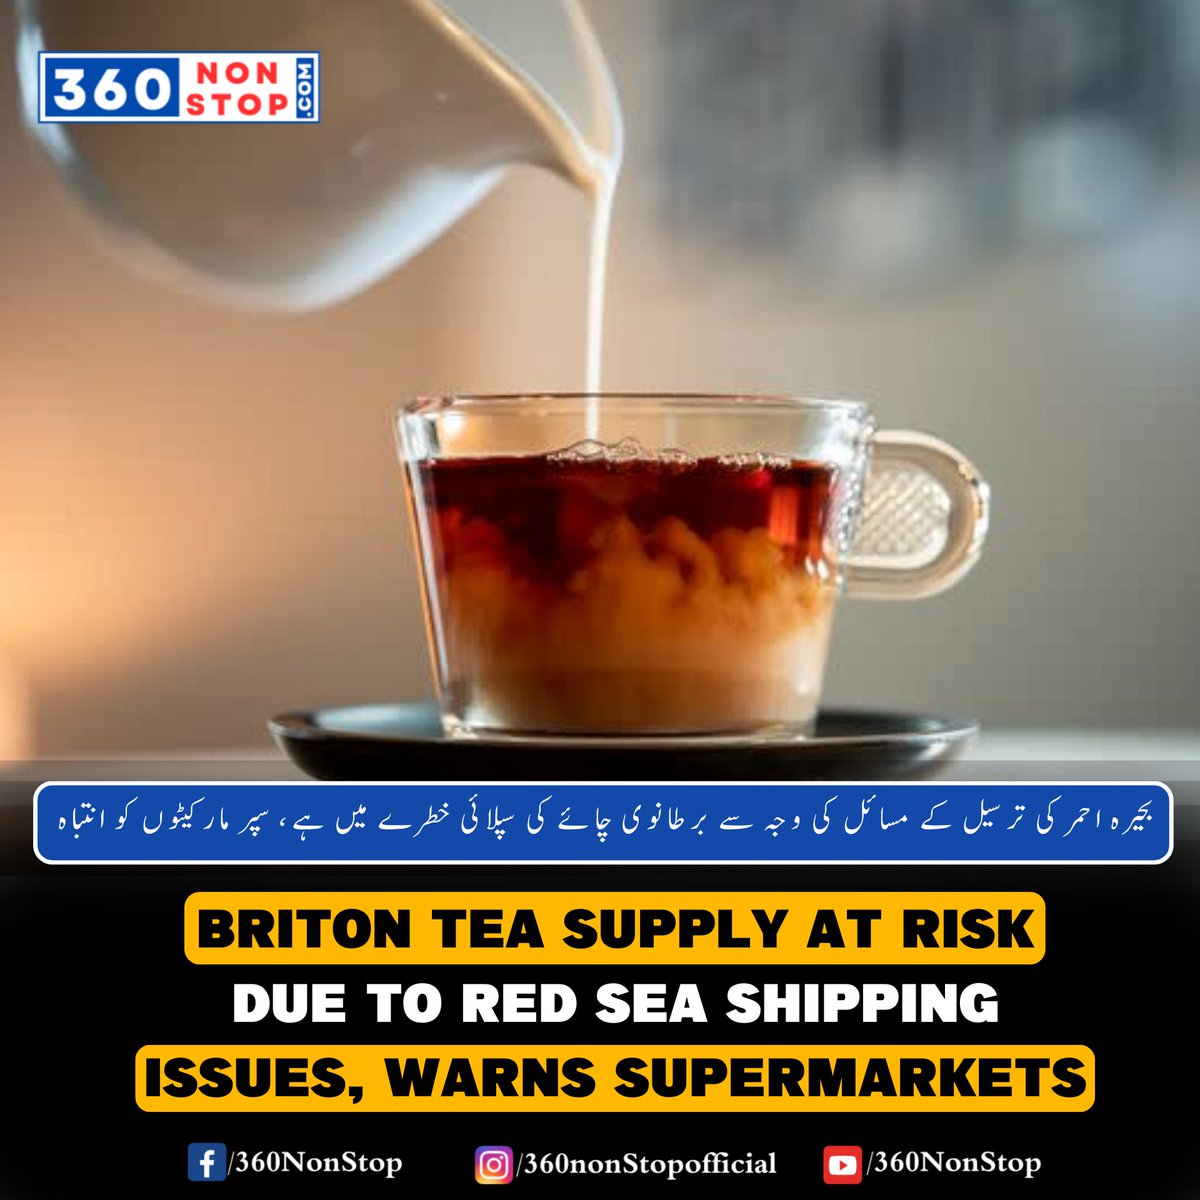 🌟 Alert on Supply Chain: بحیرہ احمر کی ترسیل کے مسائل کی وجہ سے برطانوی چائے کی سپلائی خطرے میں ہے، سپر مارکیٹوں کو انتباہ. 📱 Follow us on Instagram: [shorturl.at/zKORU] 🌐Join Our Facebook Group: [shorturl.at/mqy14] #SupplyChainAlert #RedSeaShipping #360NonStop